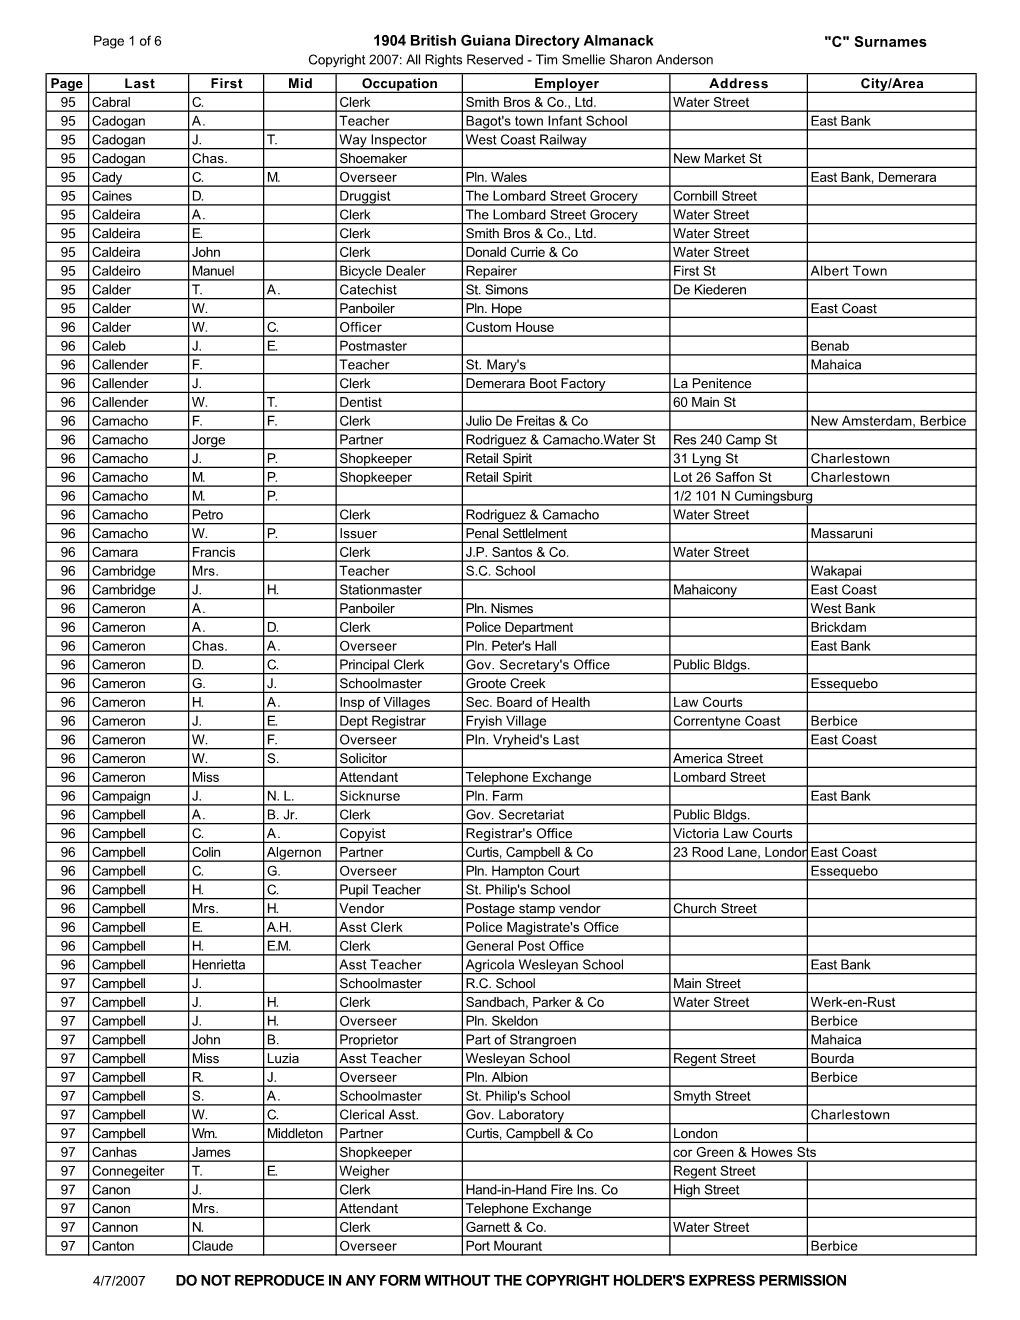 1904 British Guiana Directory Almanack "C" Surnames DO NOT